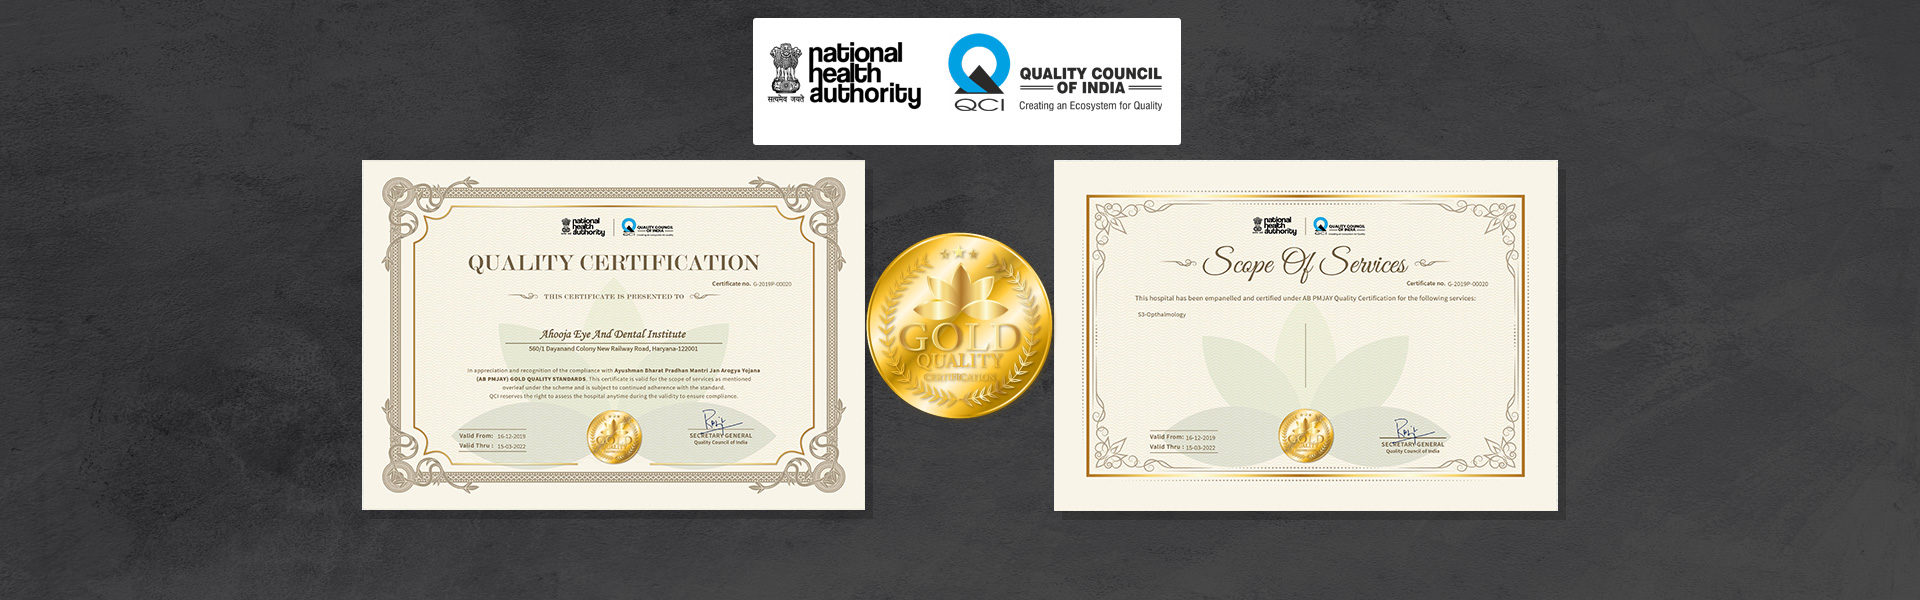 national-health-certificate-gold-standard